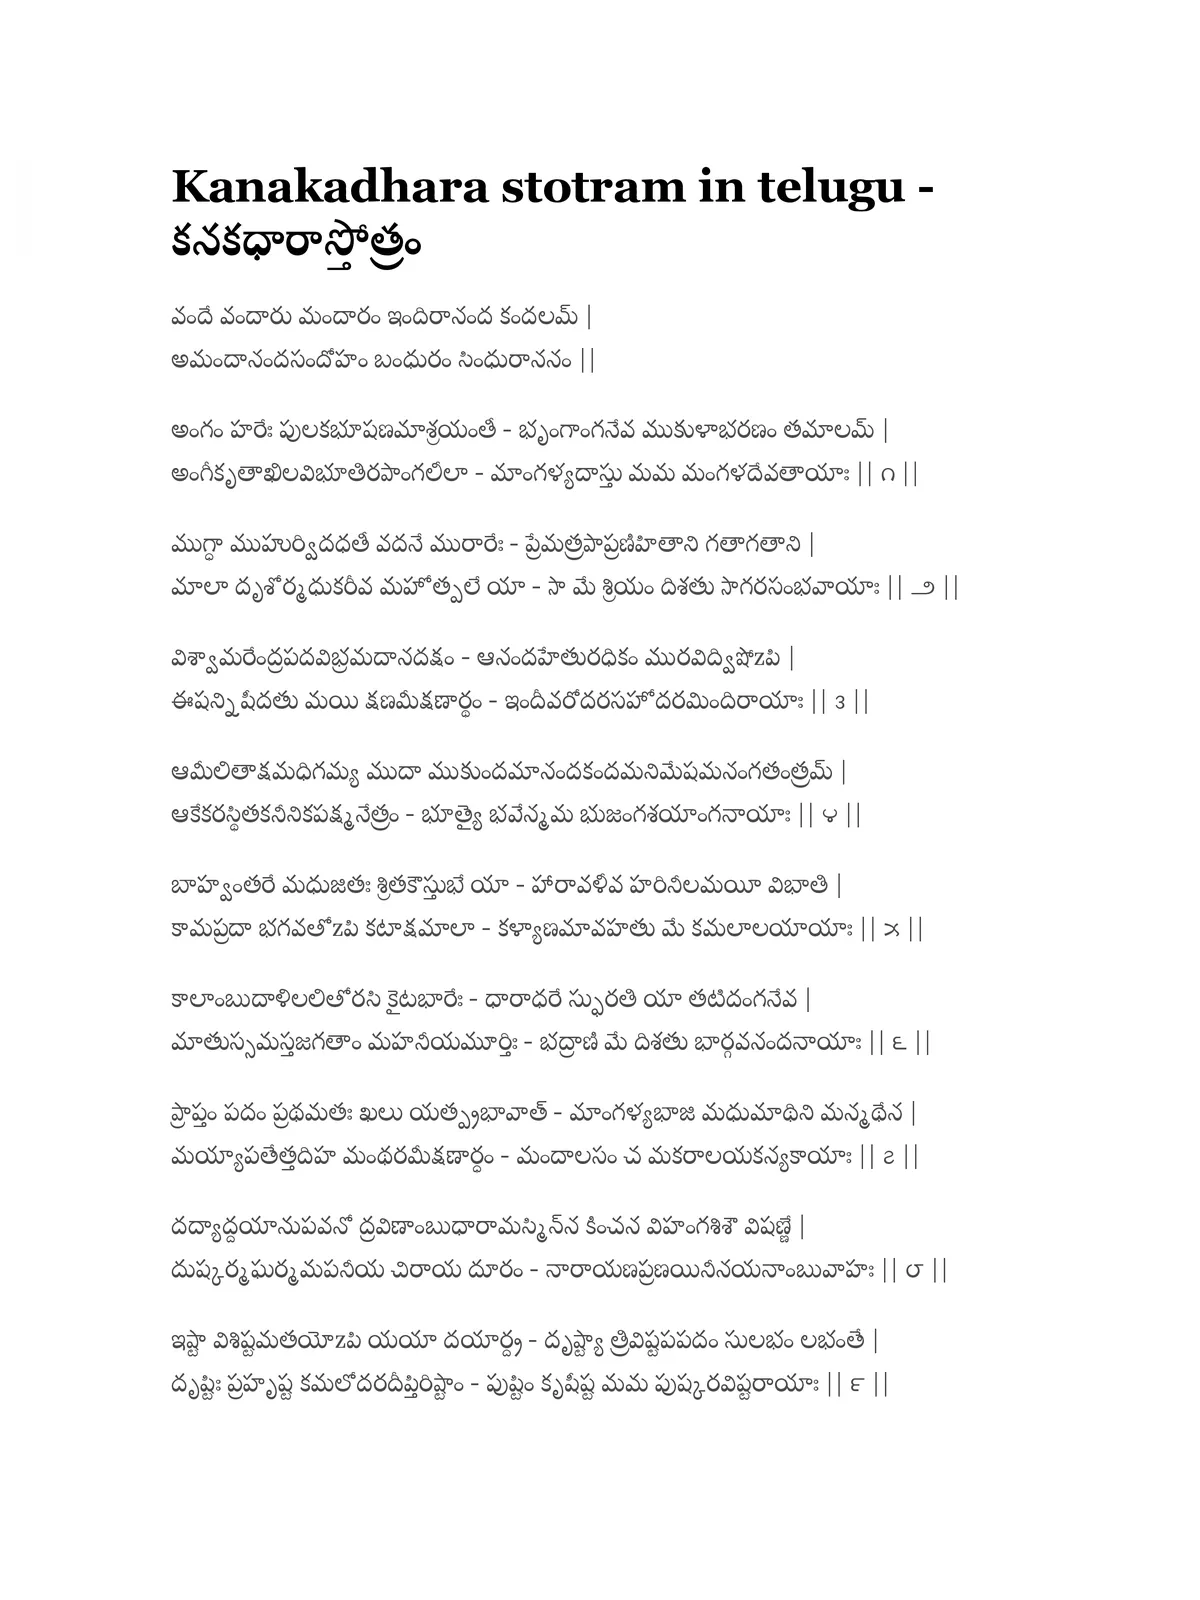 Kanakadhara Stotram Telugu Meaning (కనకధారా స్తోత్రం తెలుగు)